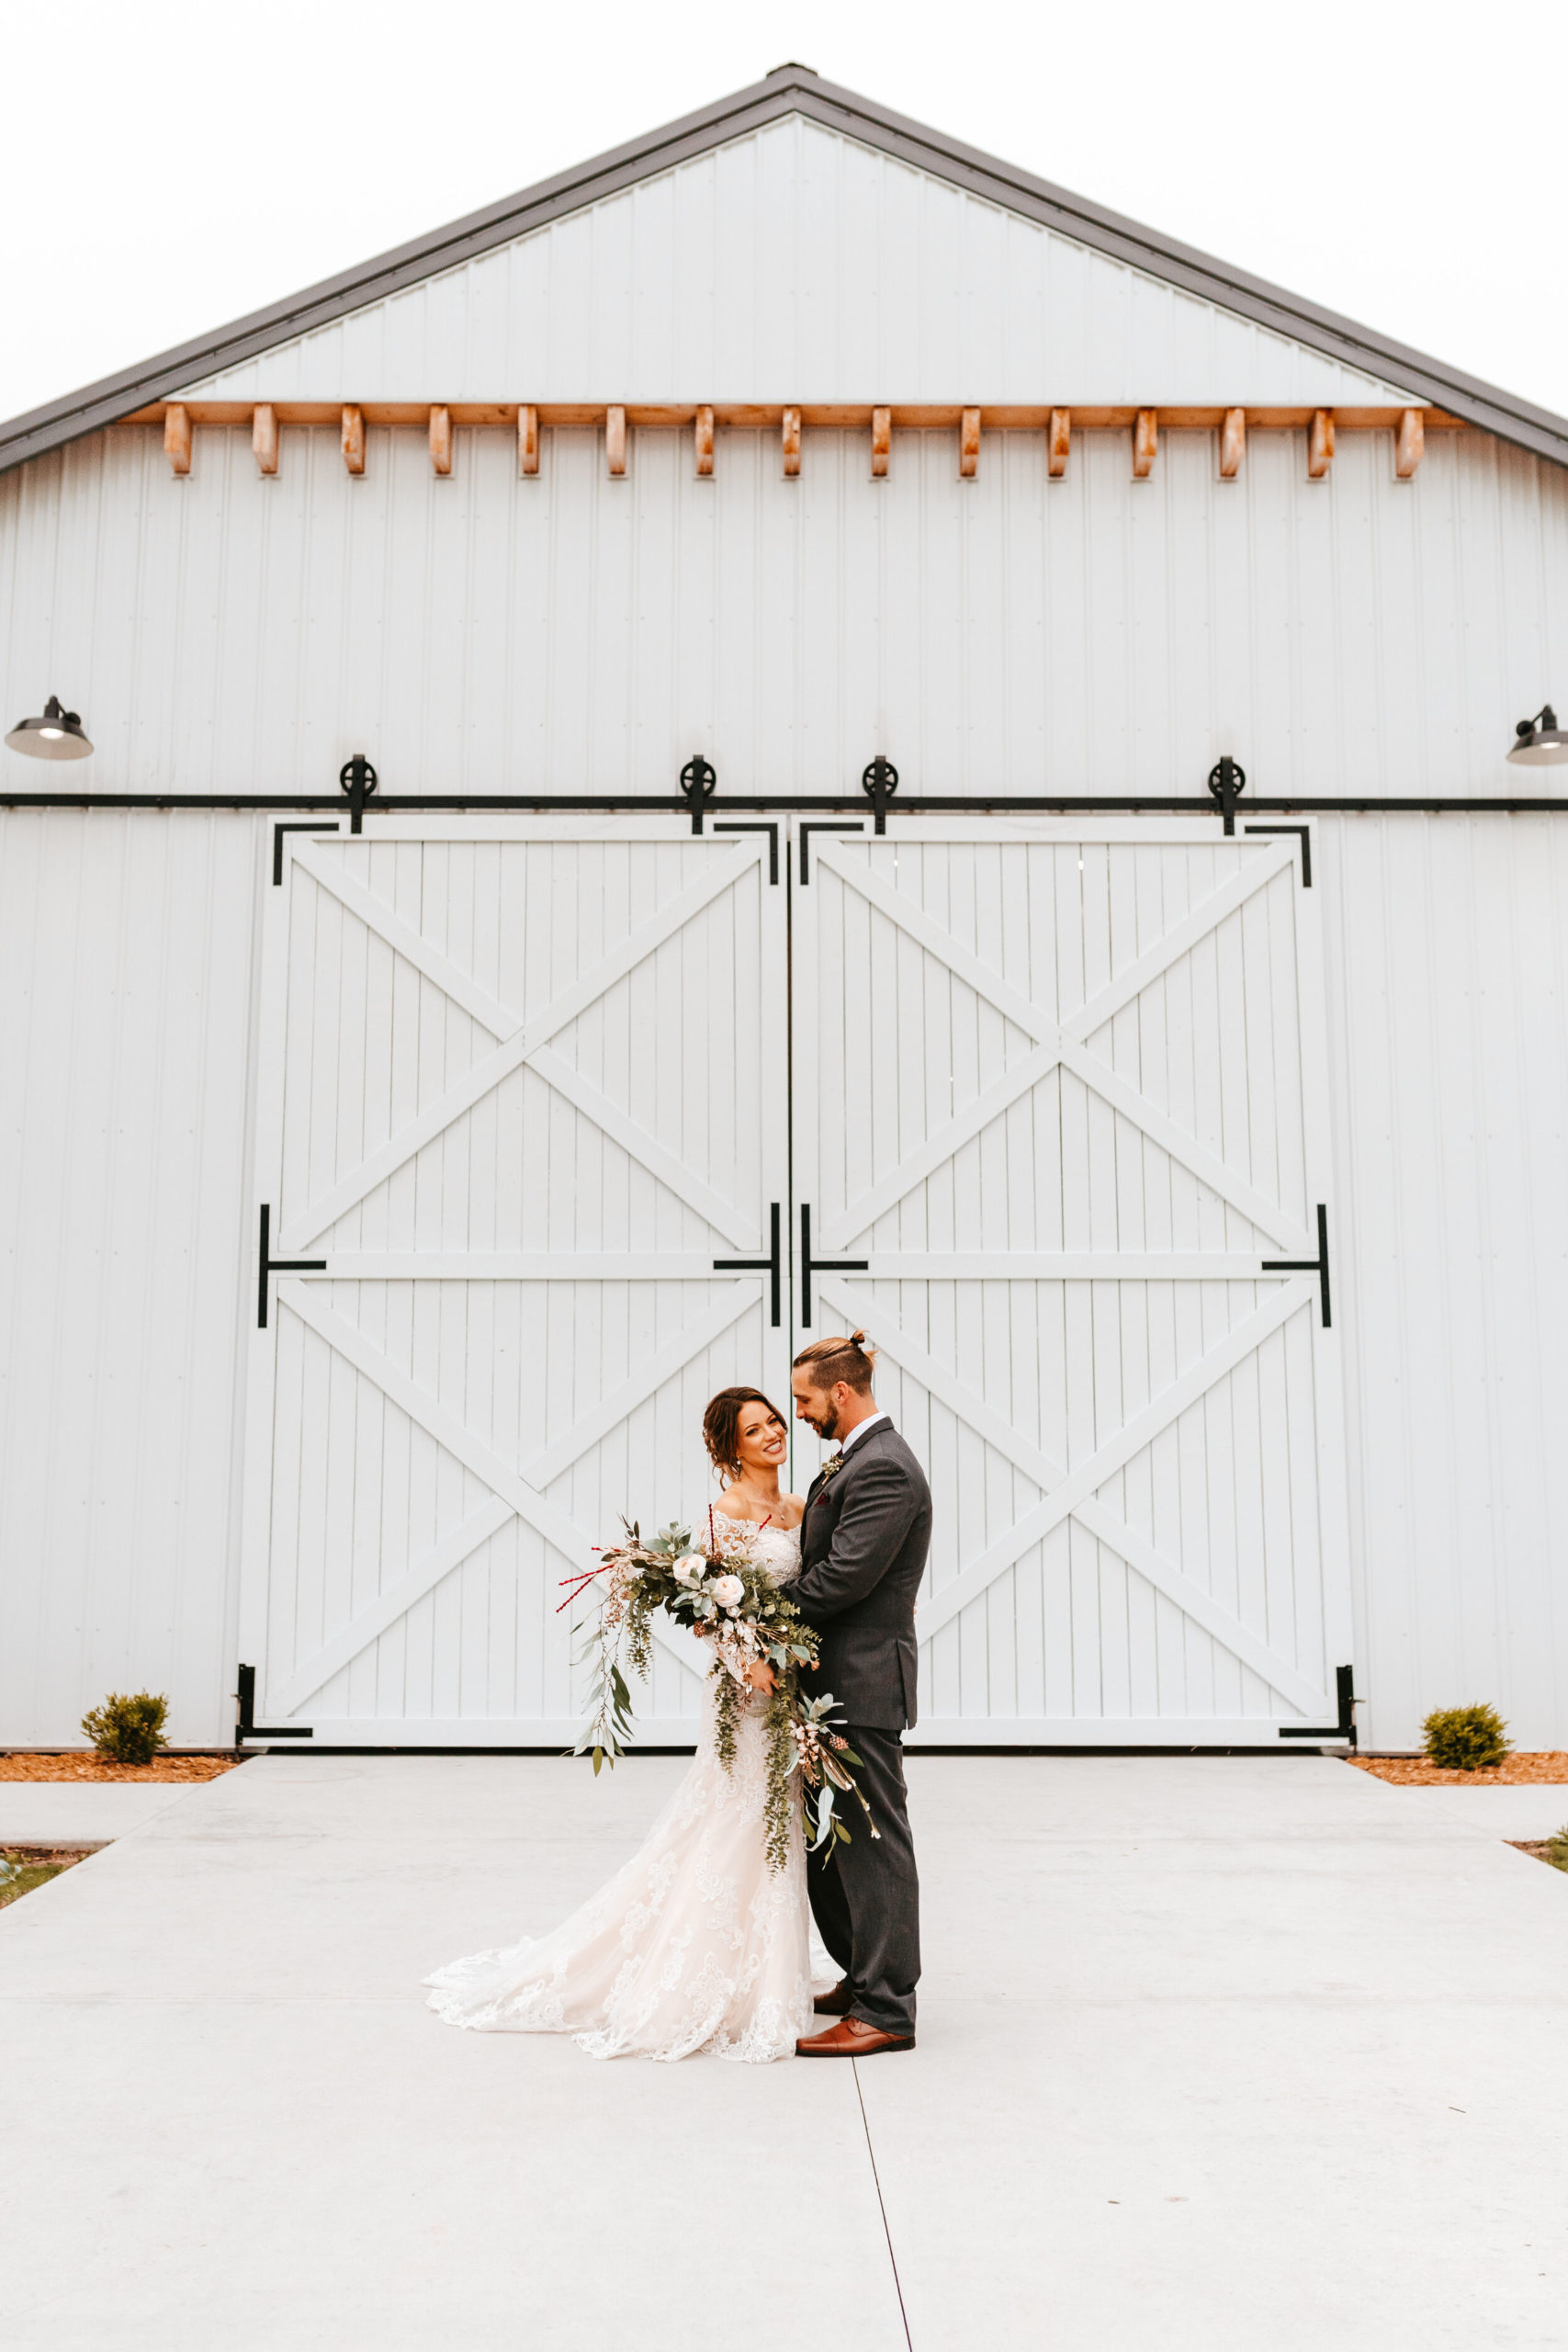 Tosha + Matt - Newton, Kansas Elegant Wedding at The Barn at Grace Hill121.jpg